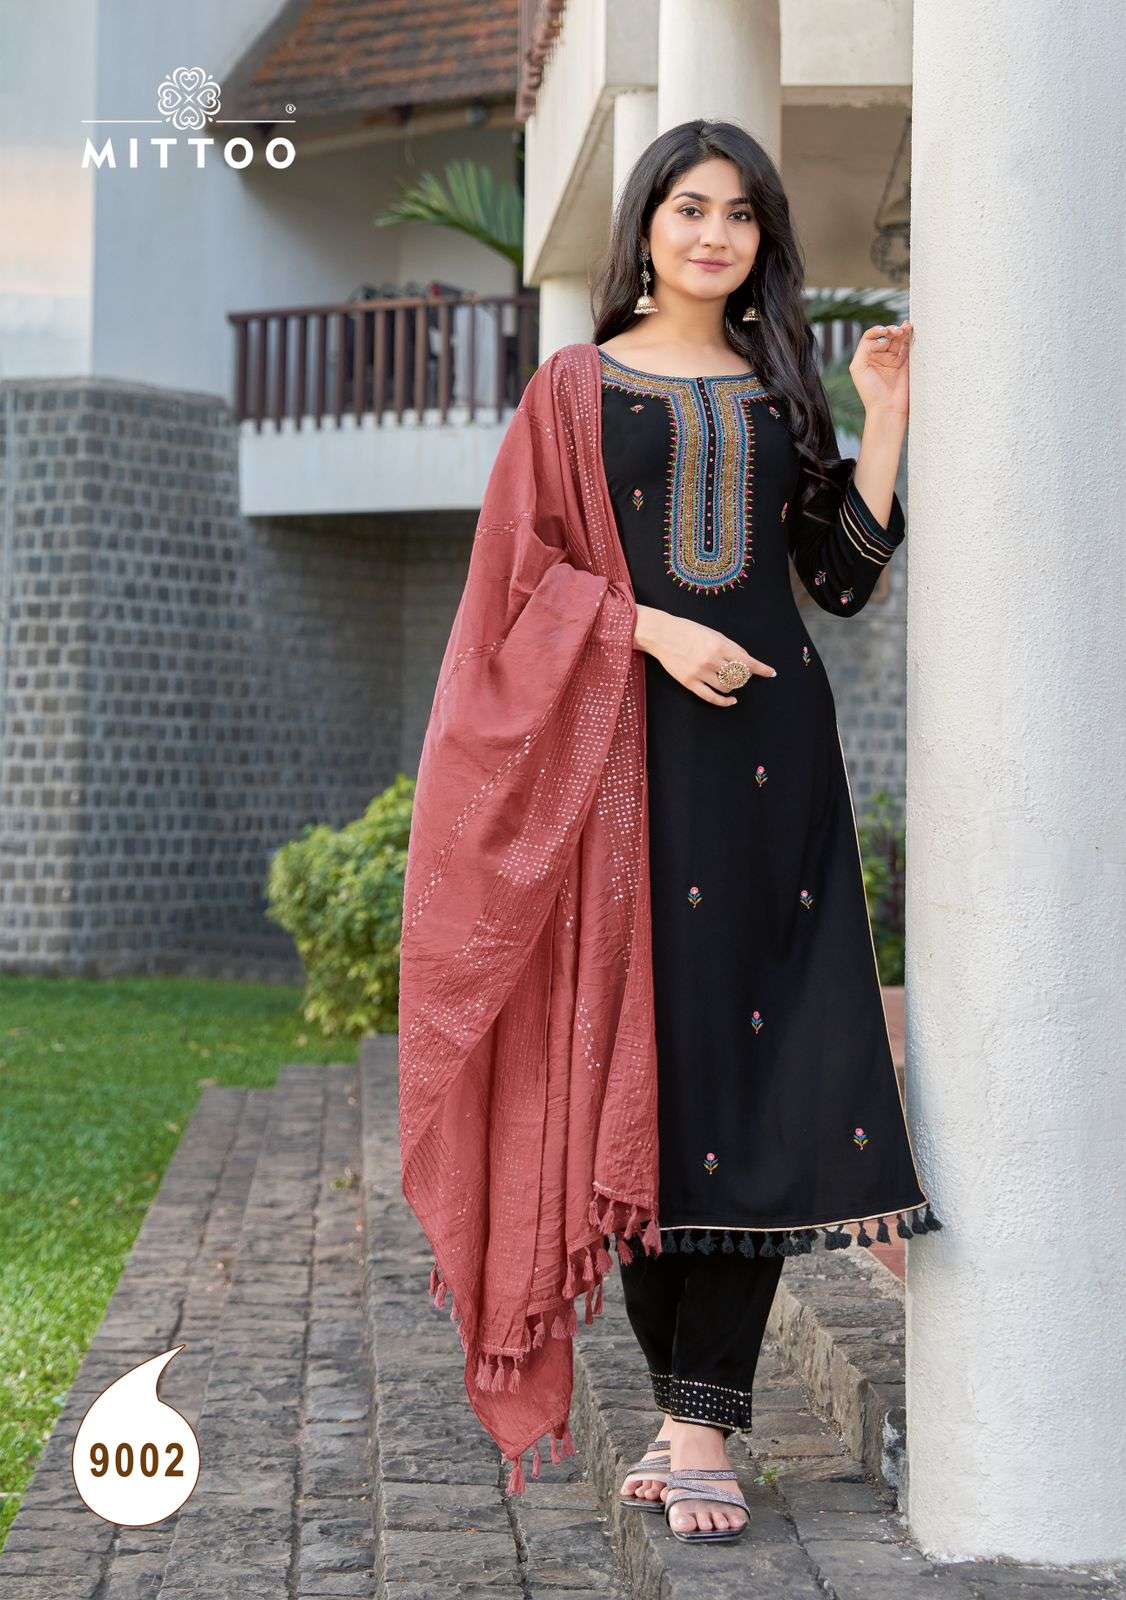 mittoo mosam 9001-9006 series designer latest fancy kurti pant dupatta set wholesaler surat gujarat